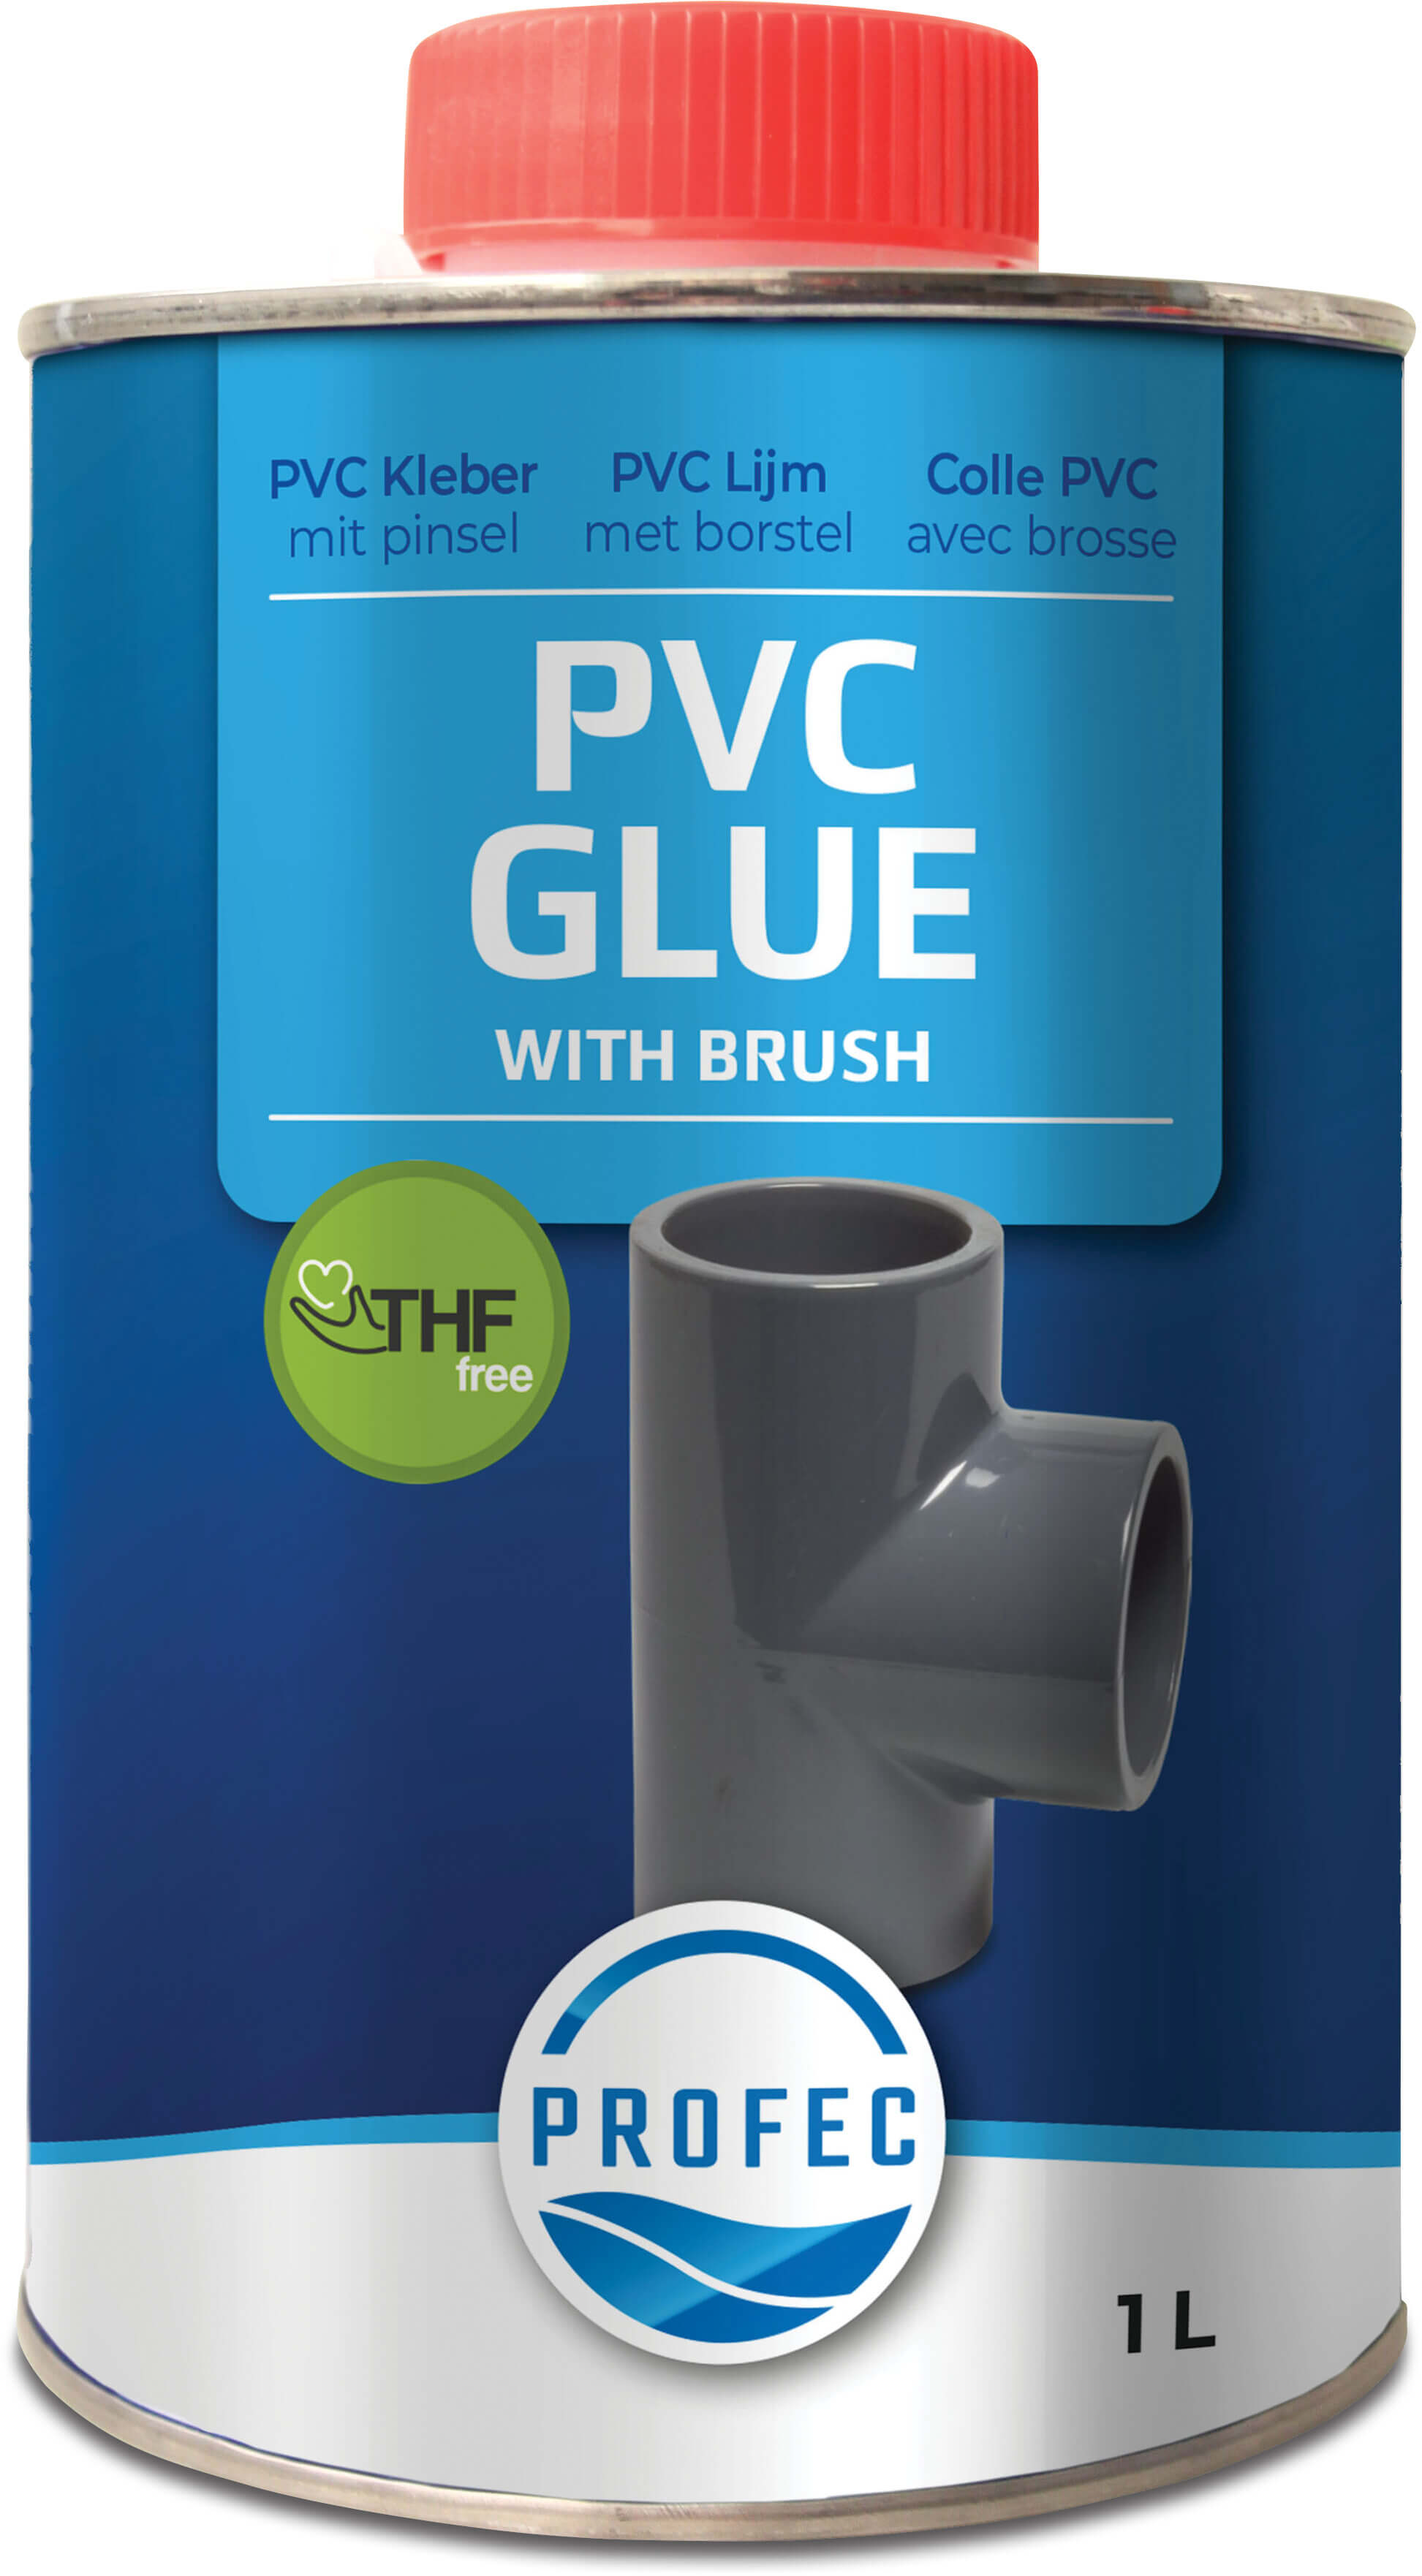 Profec PVC glue 1ltr with brush type THF free label PL/DK/SE